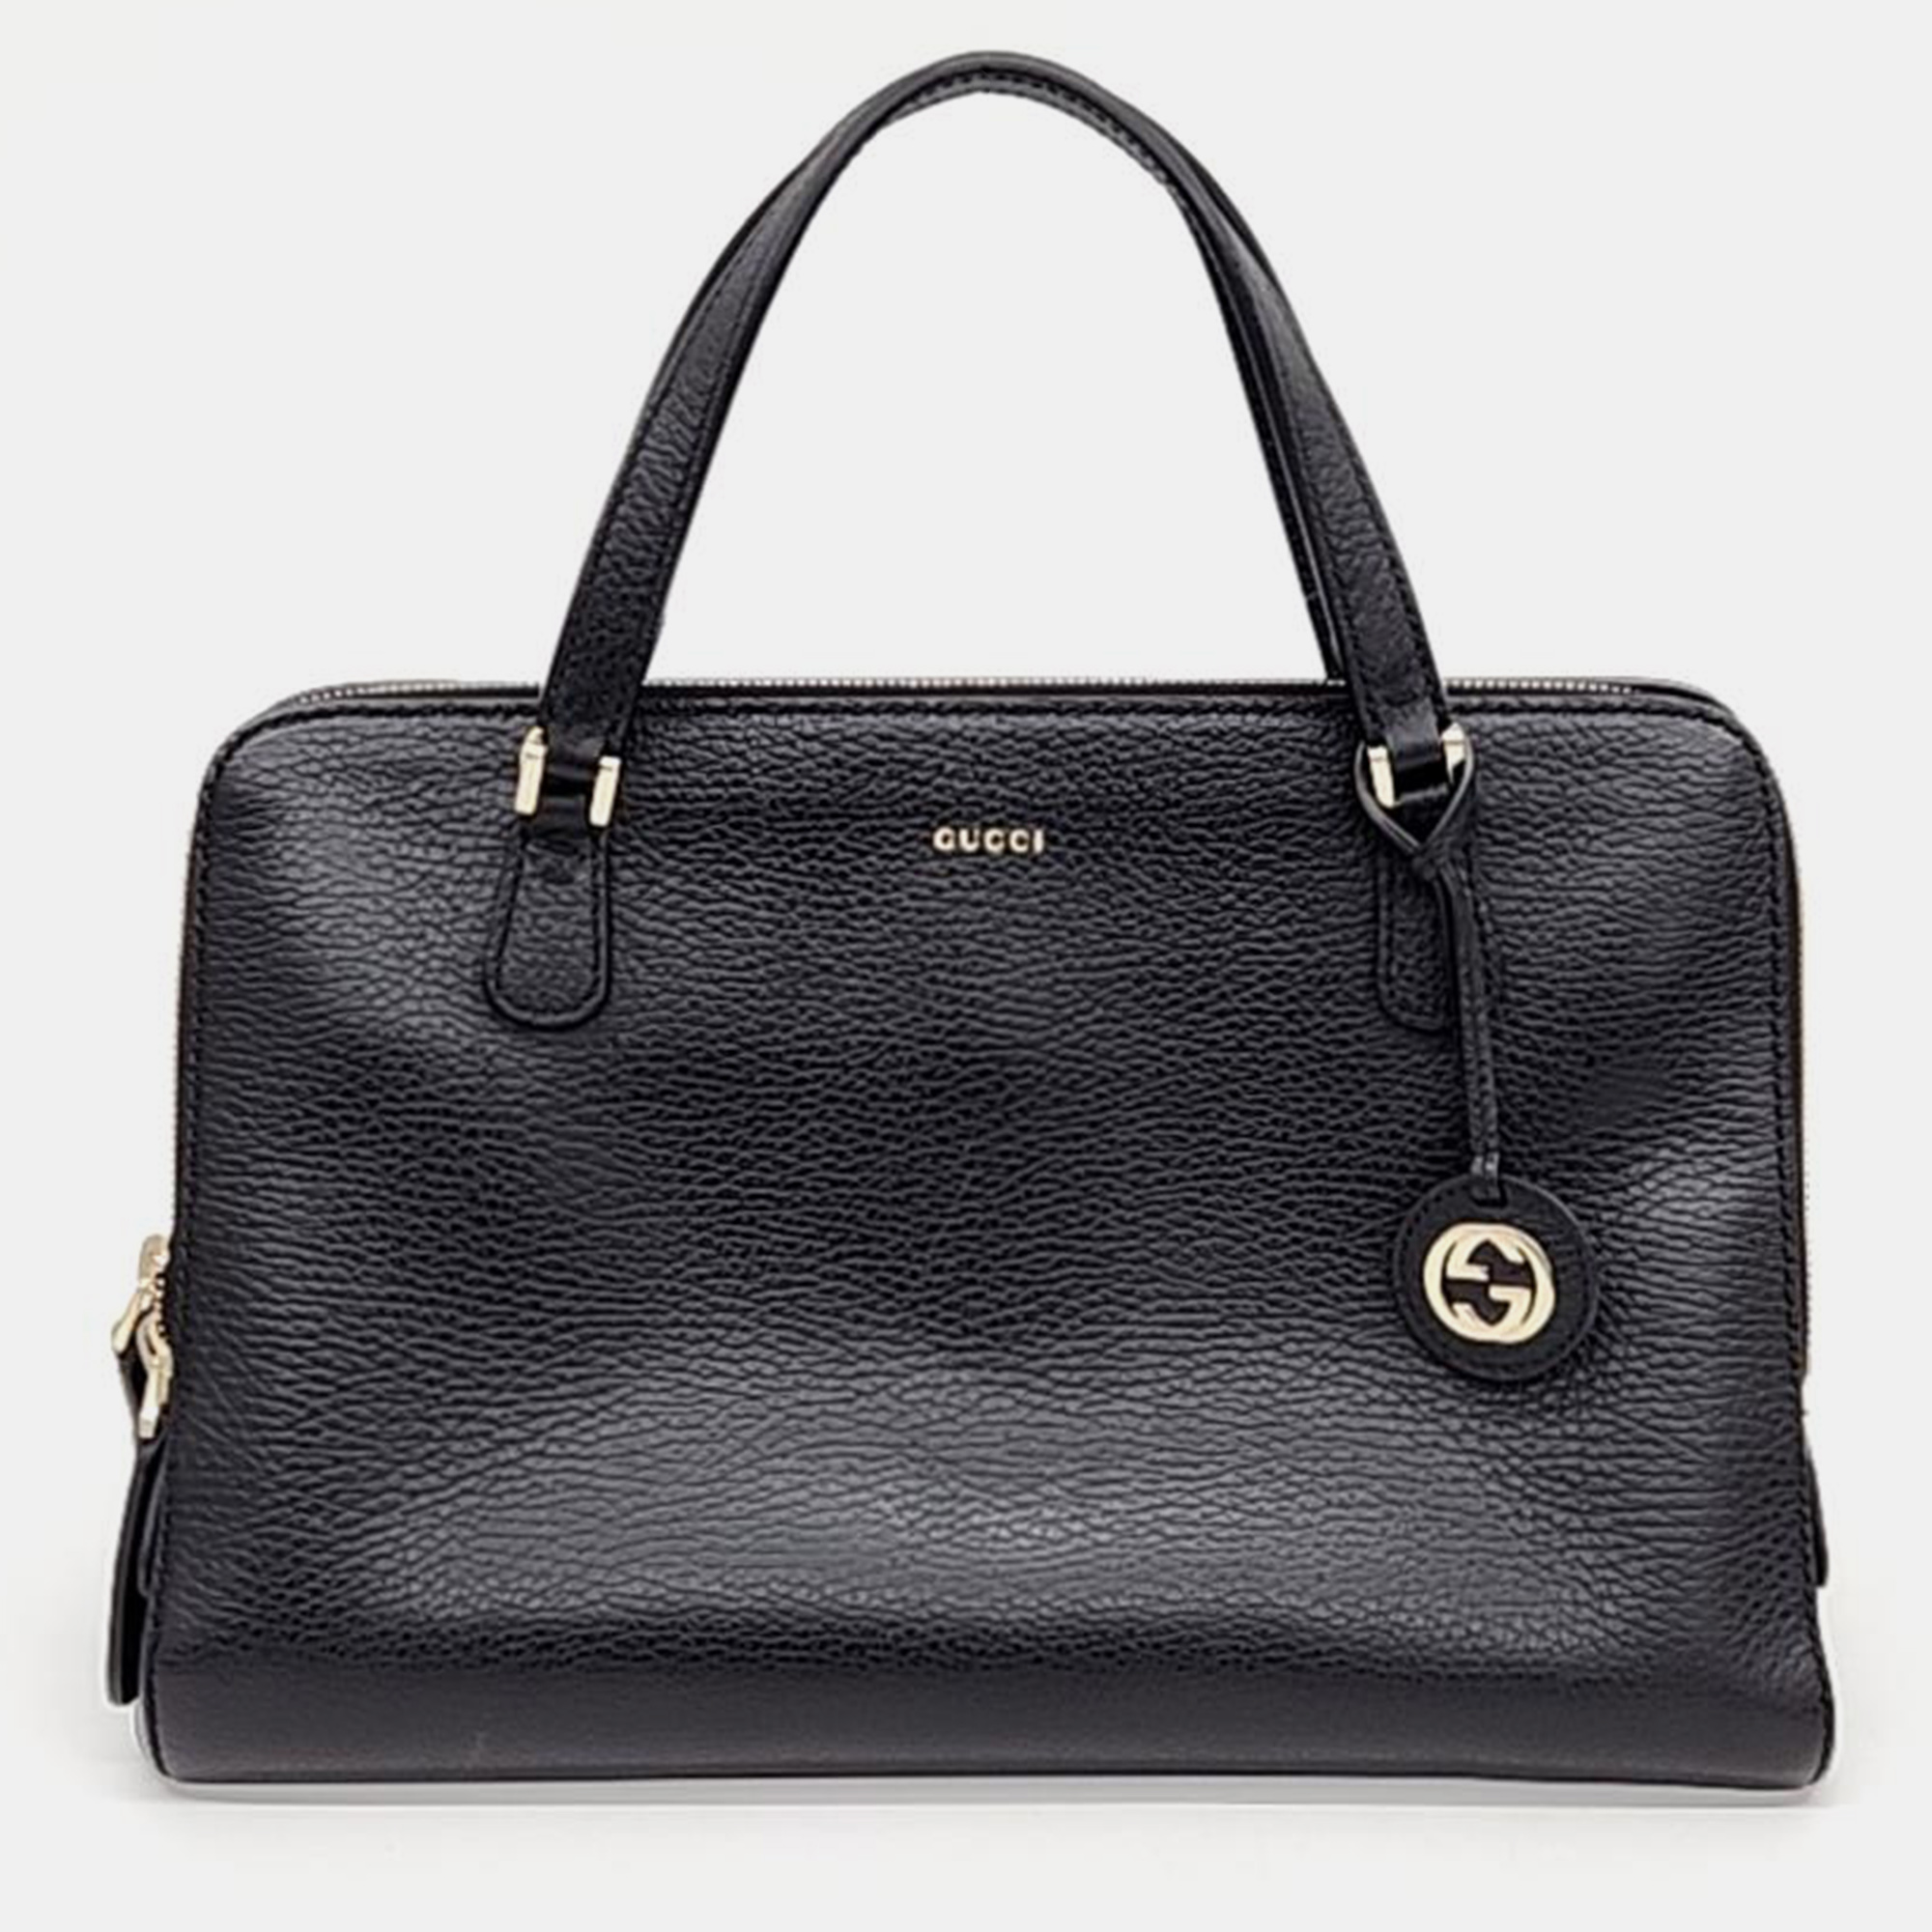 Gucci black leather tote and shoulder bag